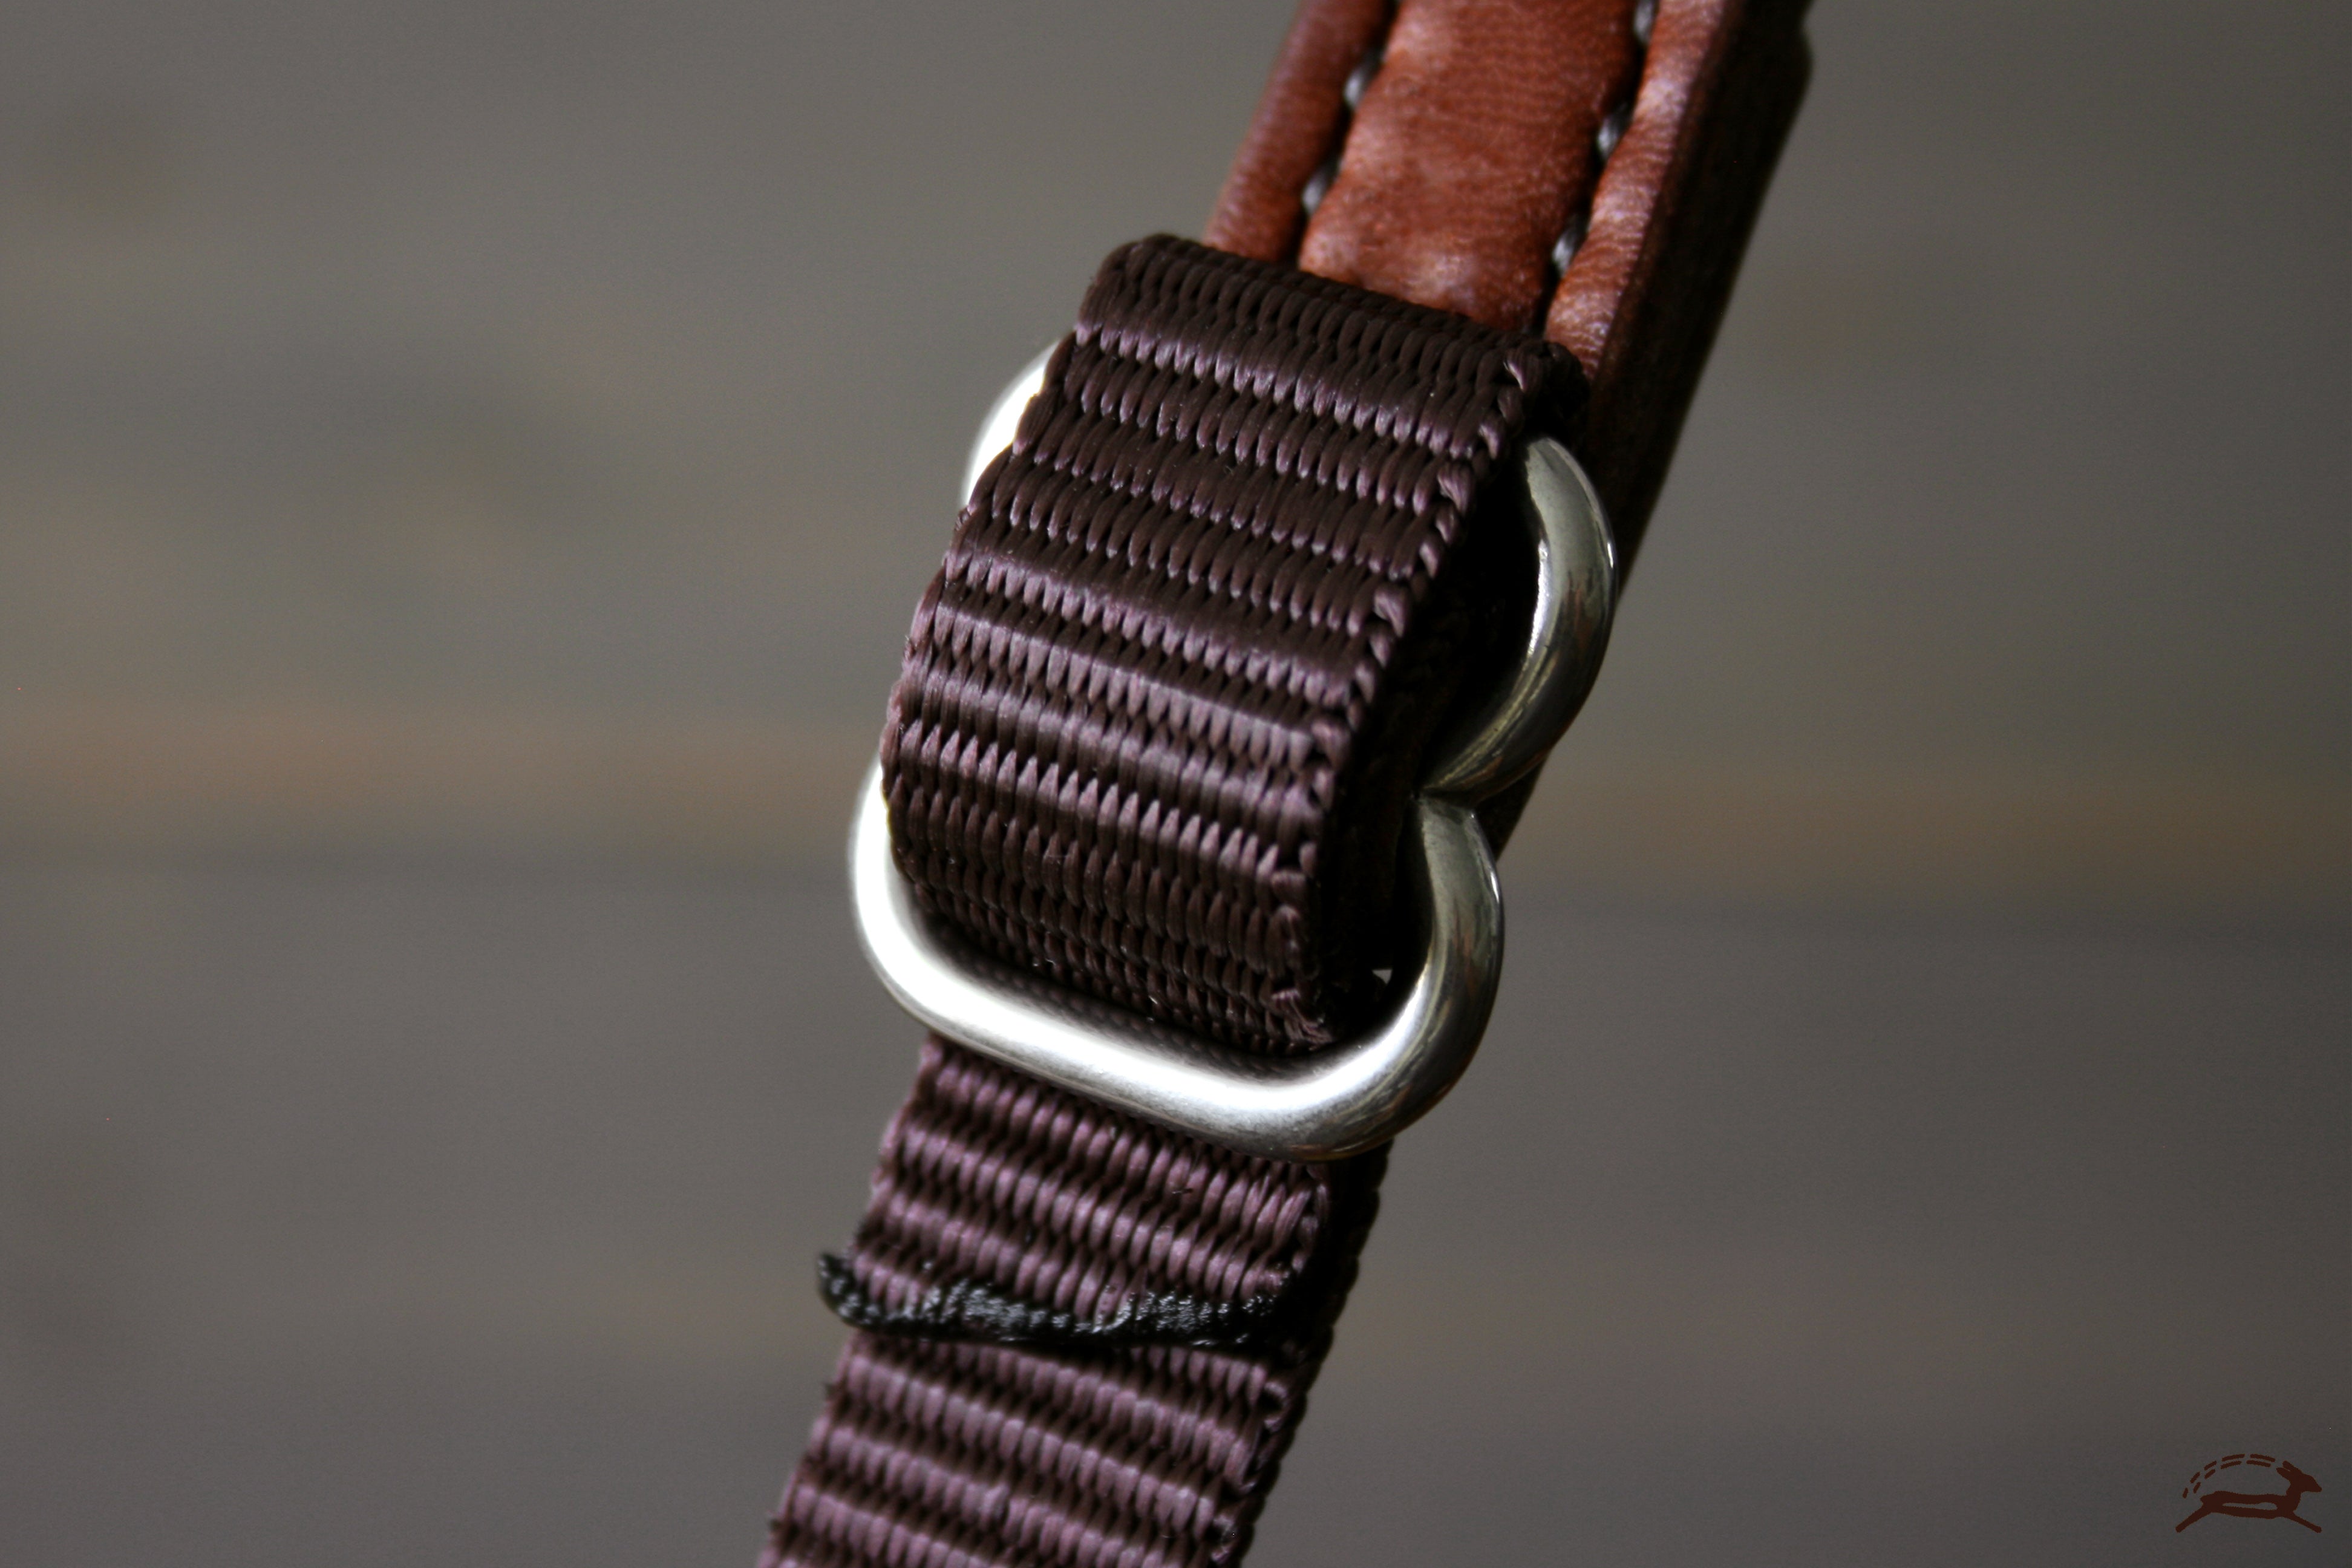 Keychain Strap Attachment - OCHRE handcrafted